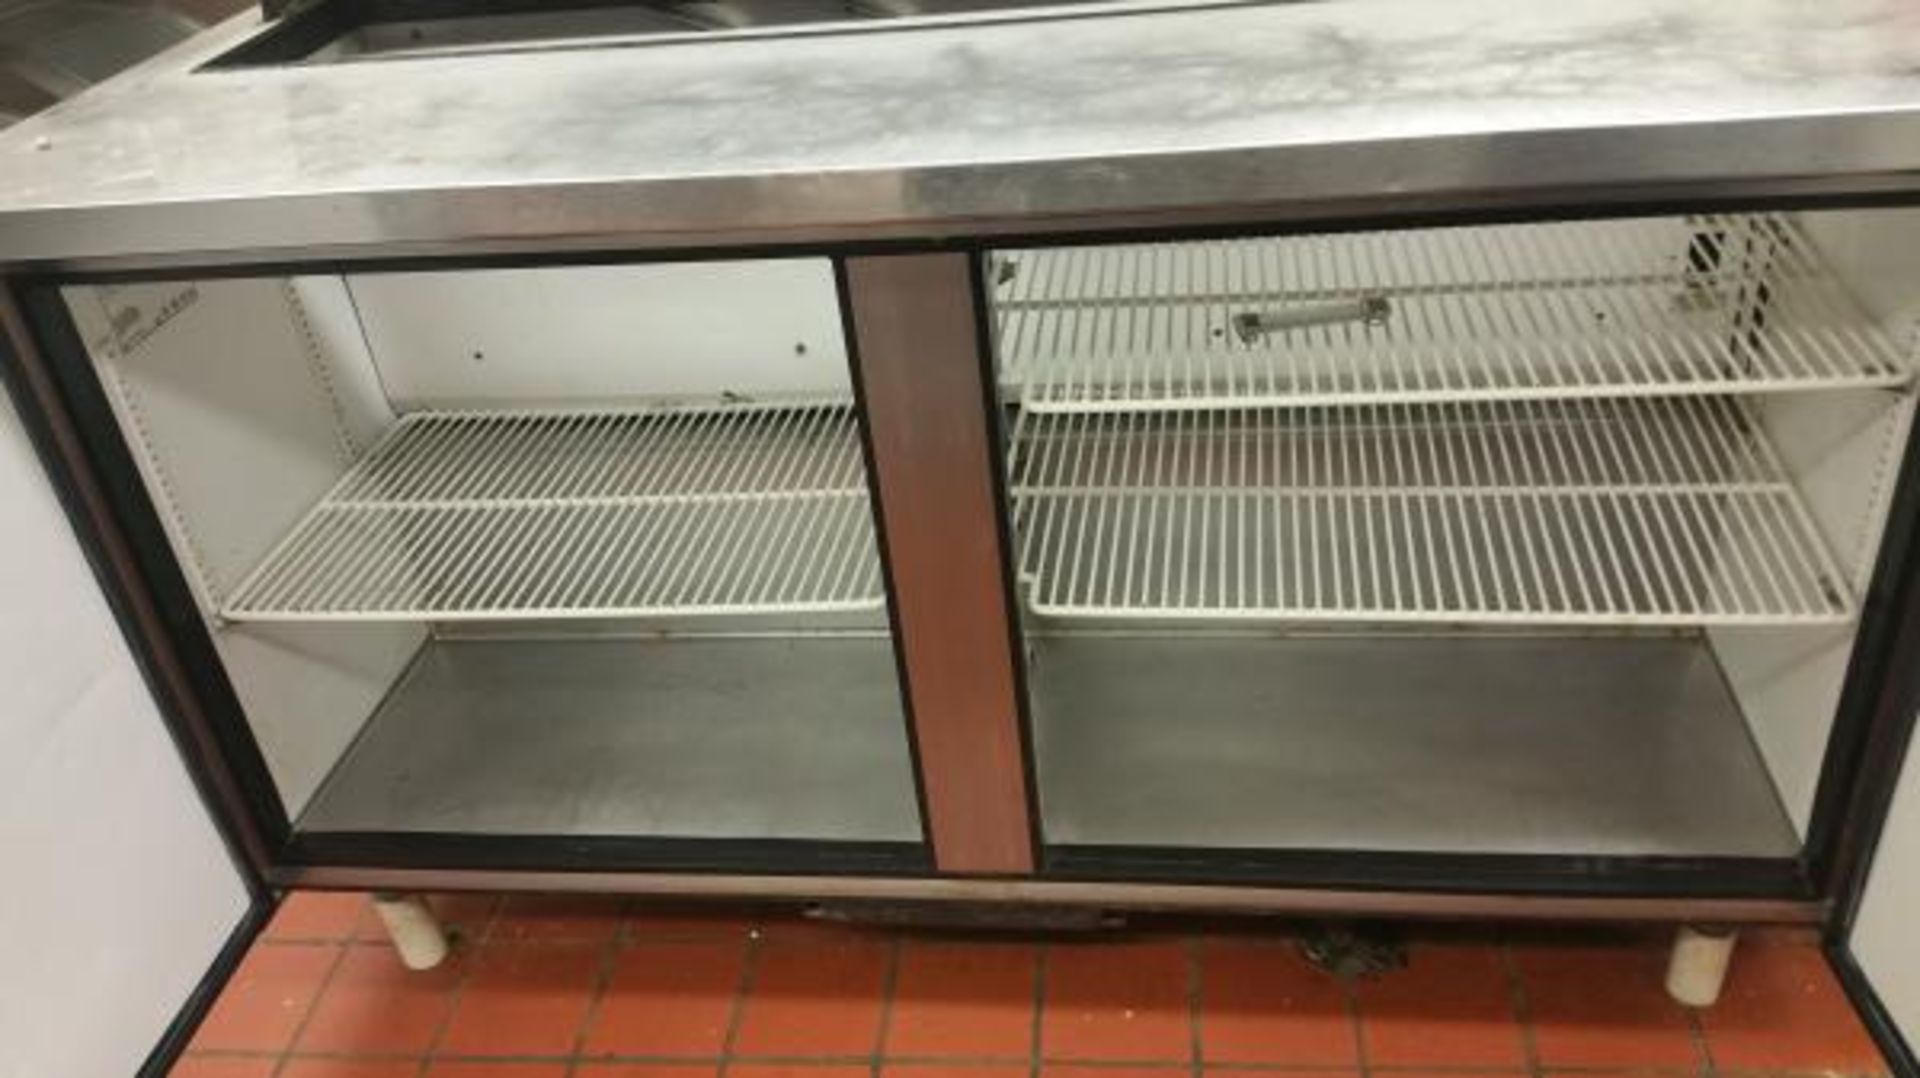 True Refrigeration 60"x30" Two Door Commercial Salad/Sandwich/Pizza Prep Refrigerator S/S Exterior